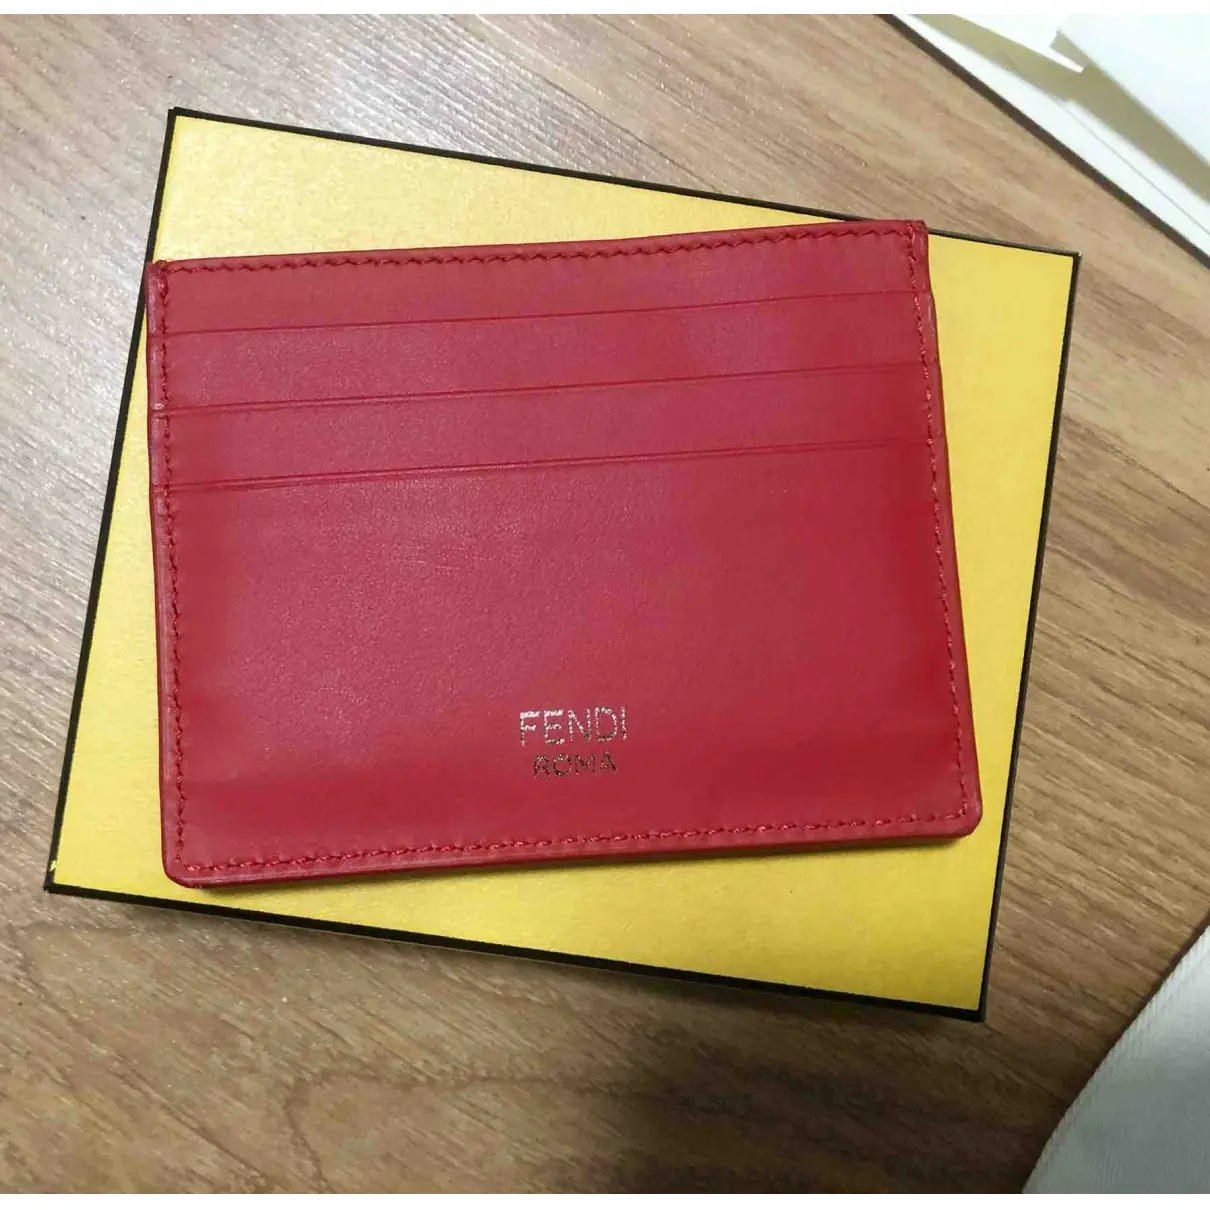 Buy Fendi Leather small bag online